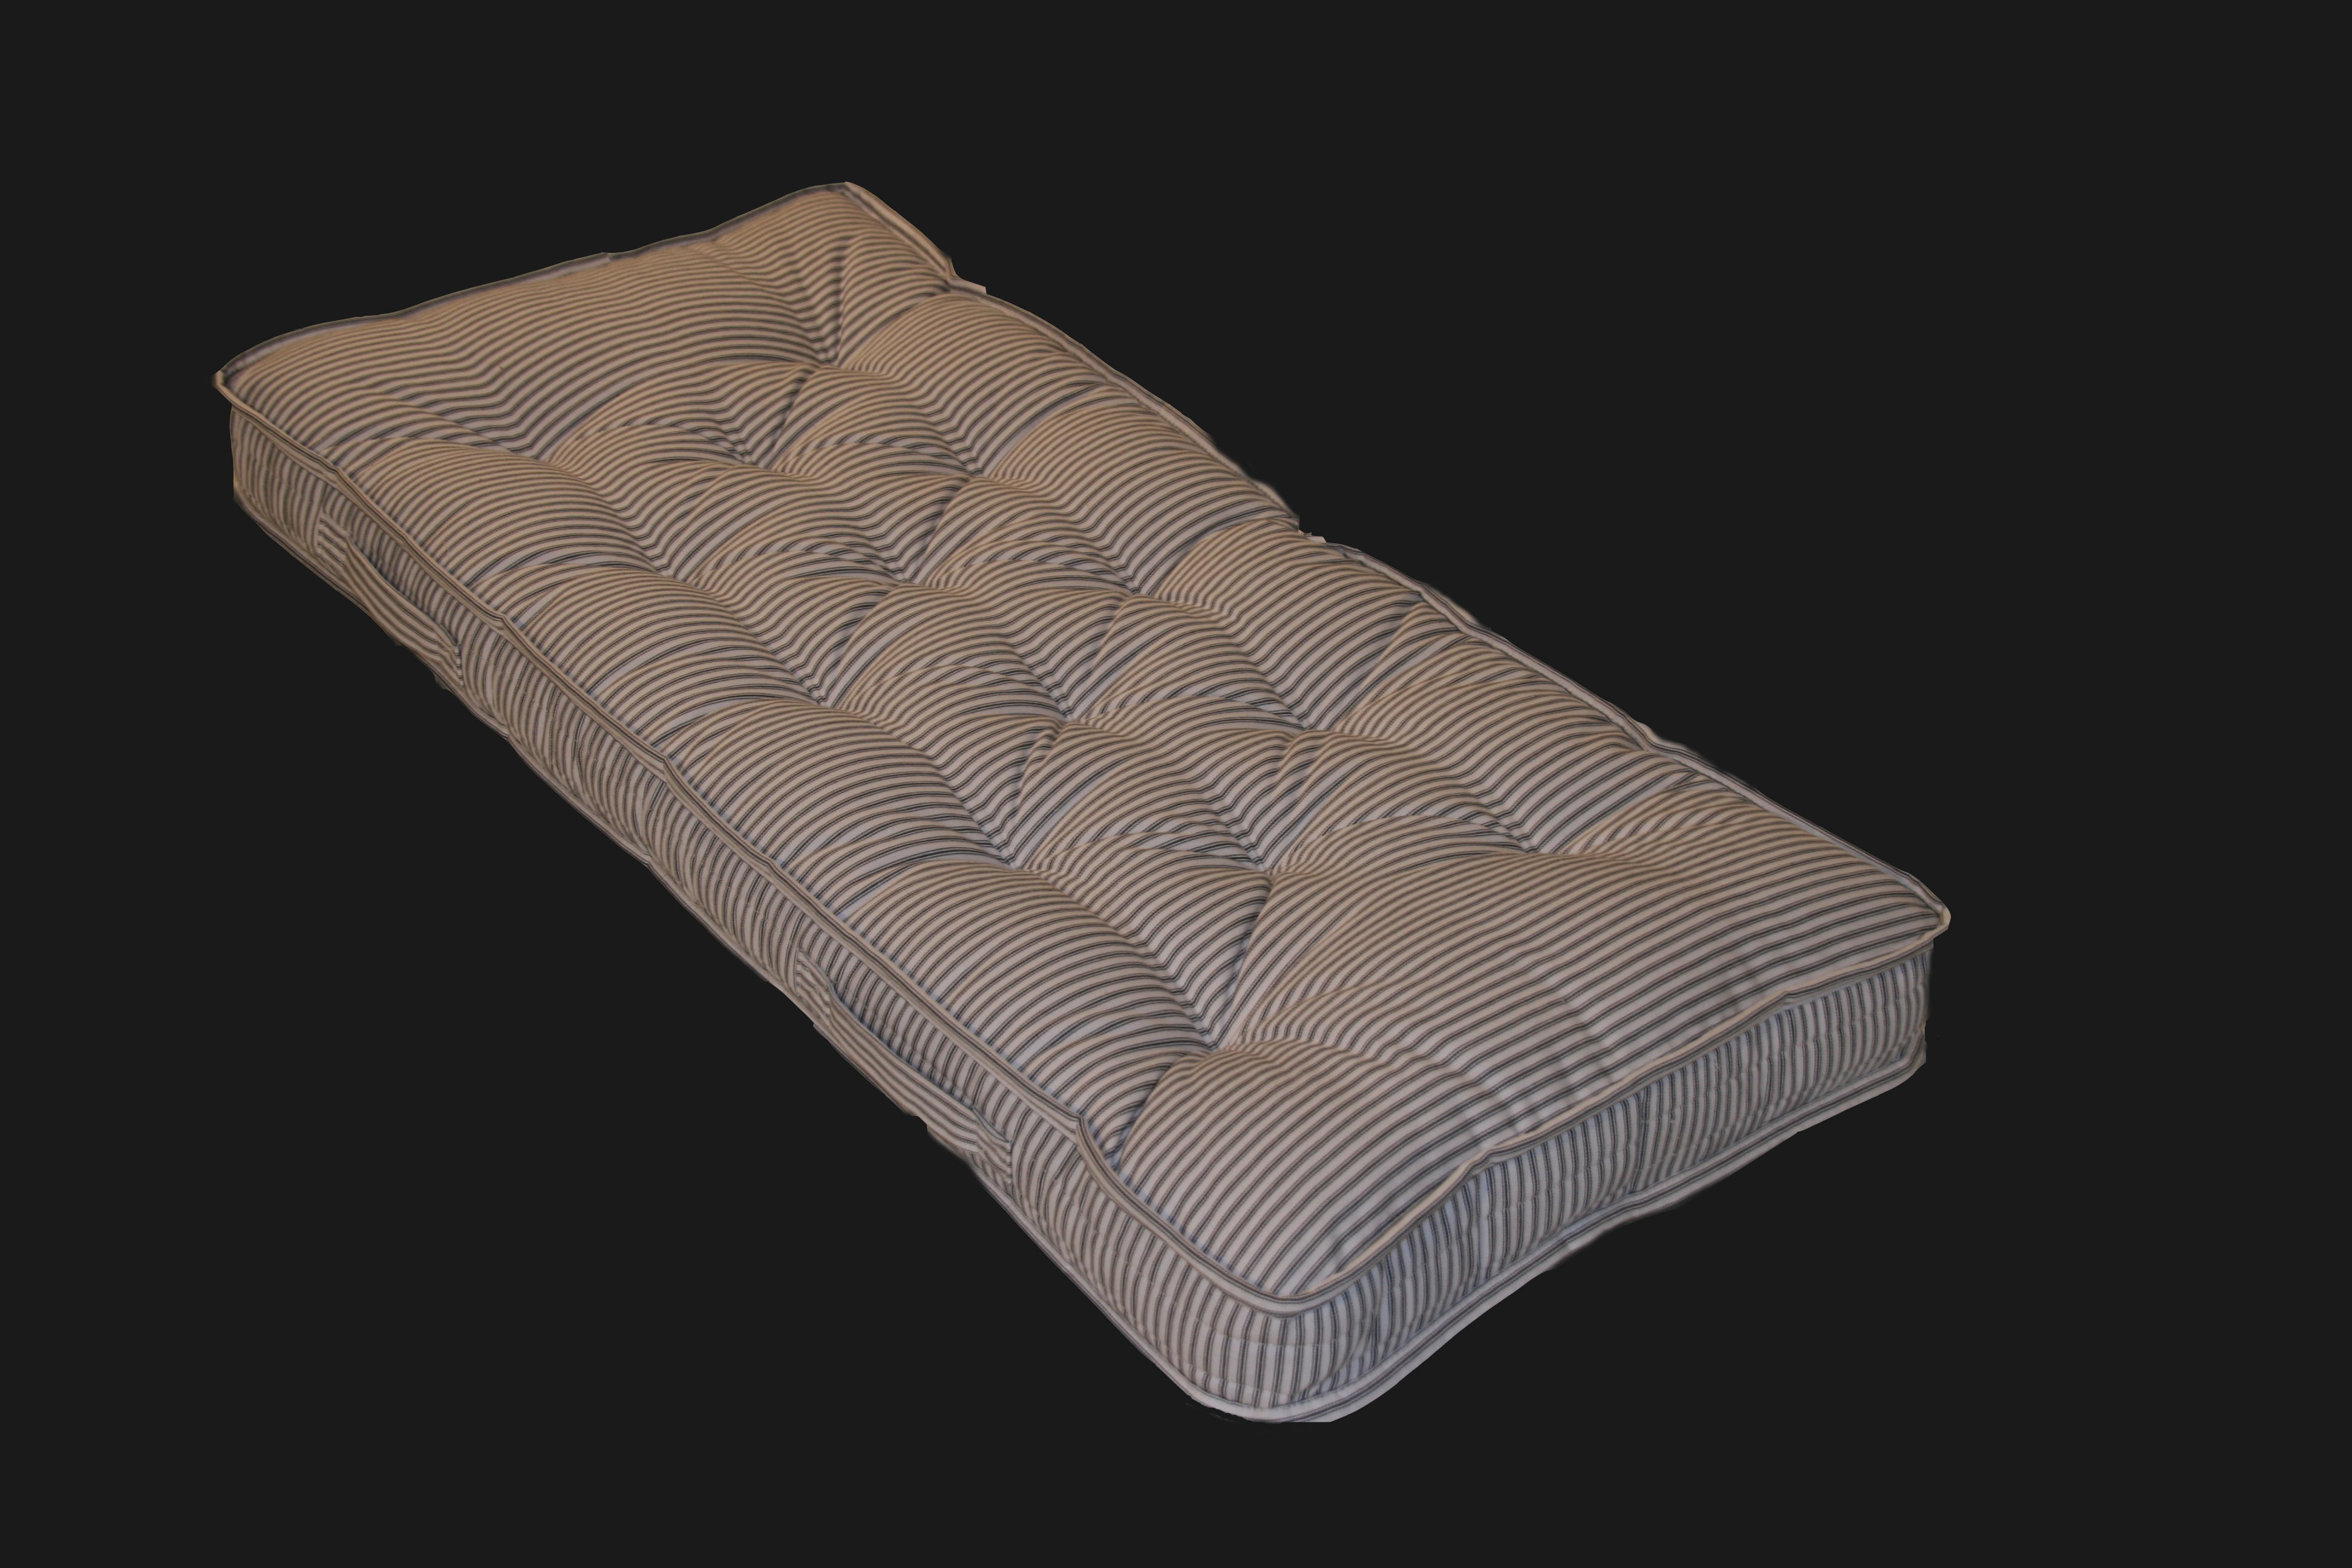 cot mattress cover kmart